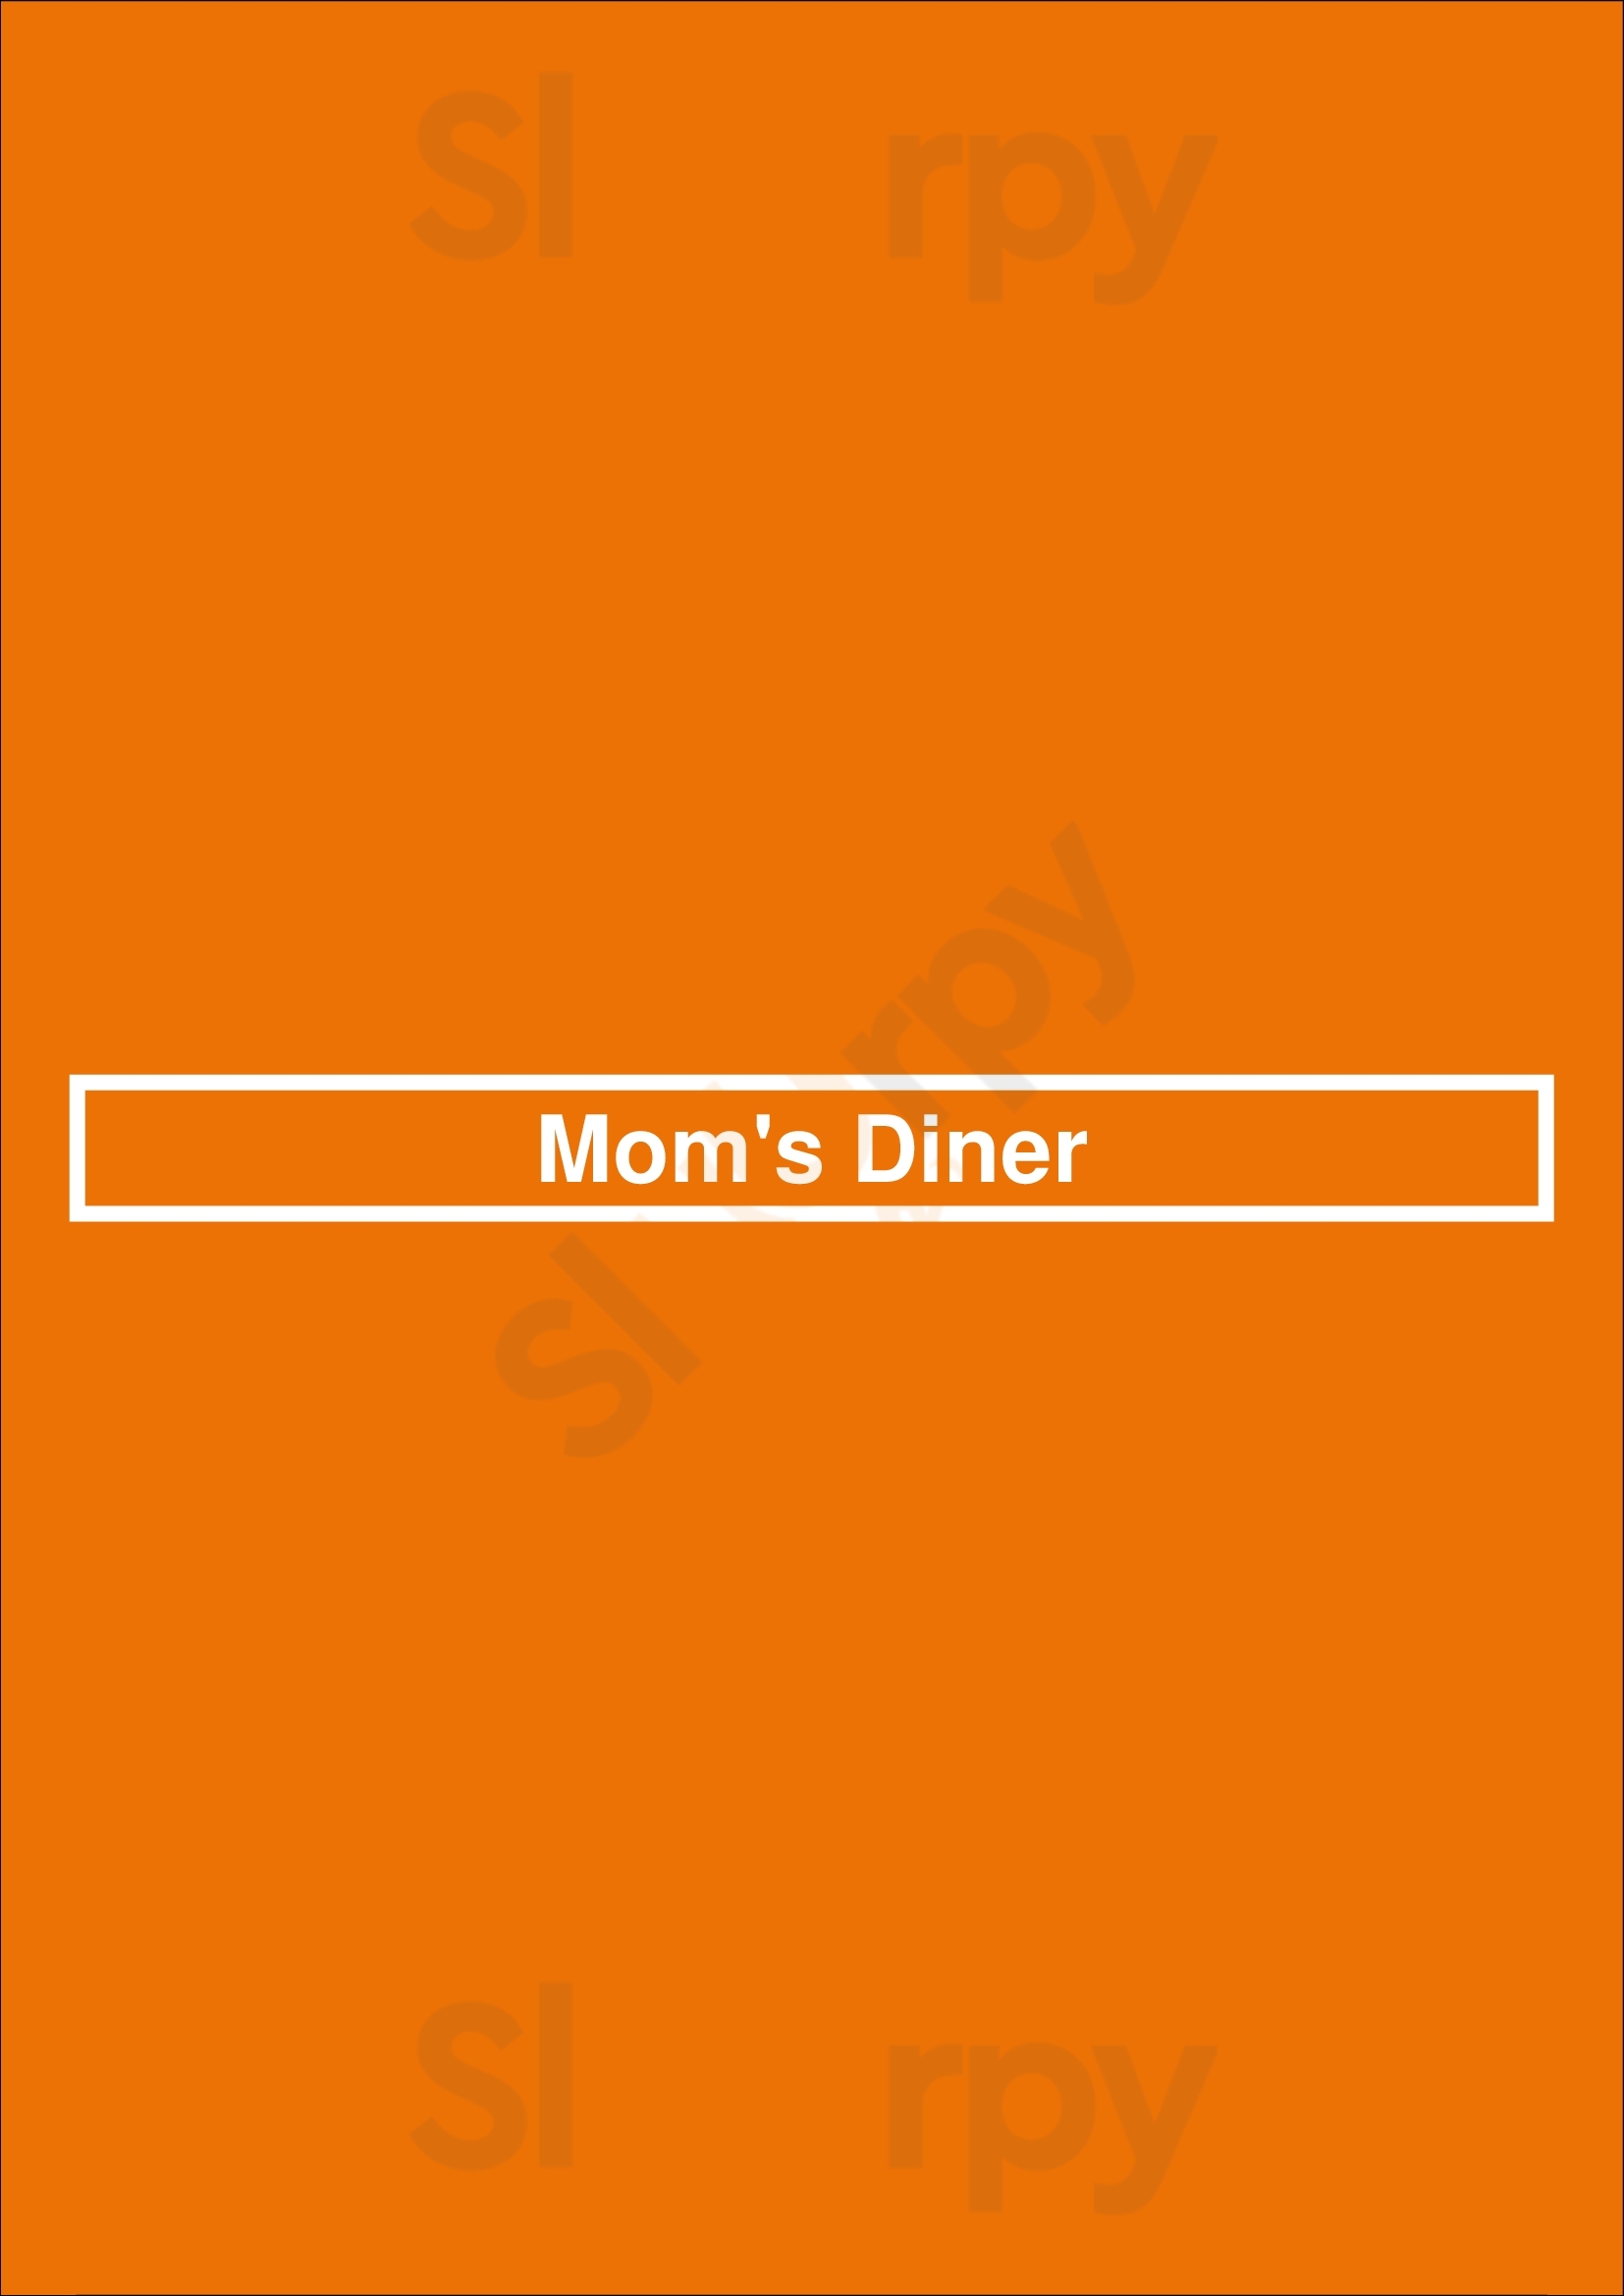 Mom's Diner Syracuse Menu - 1